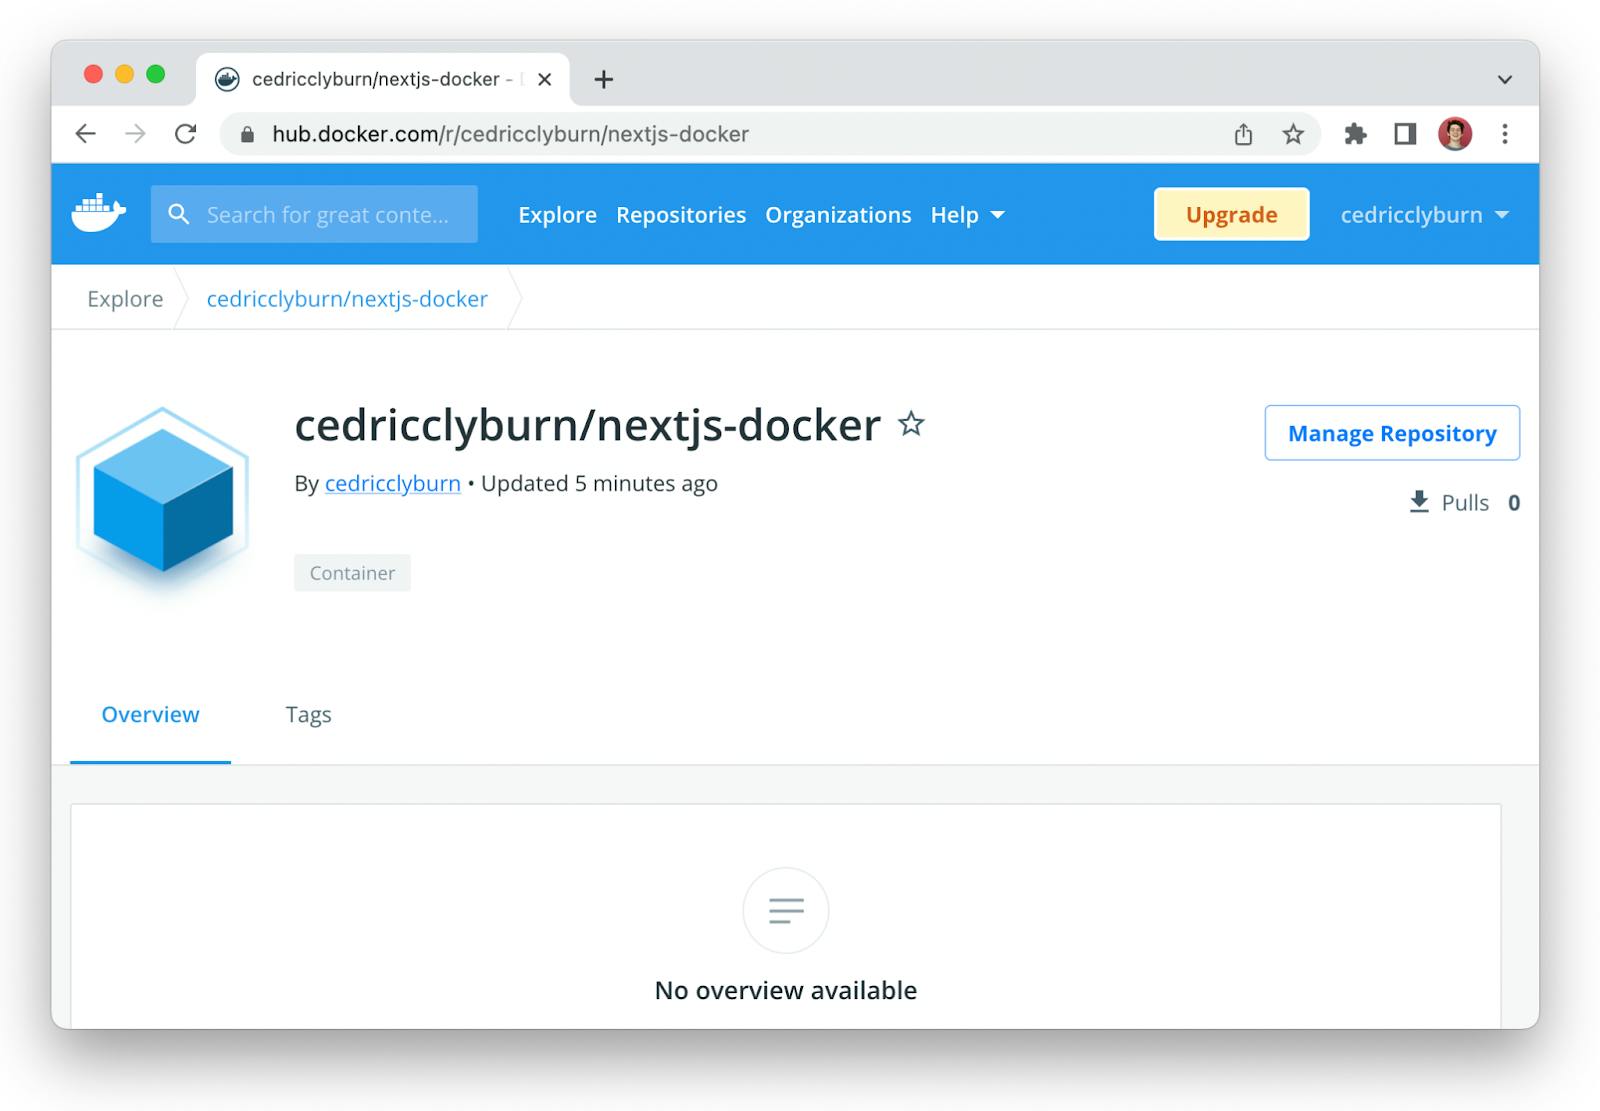 View of image in Docker Hub